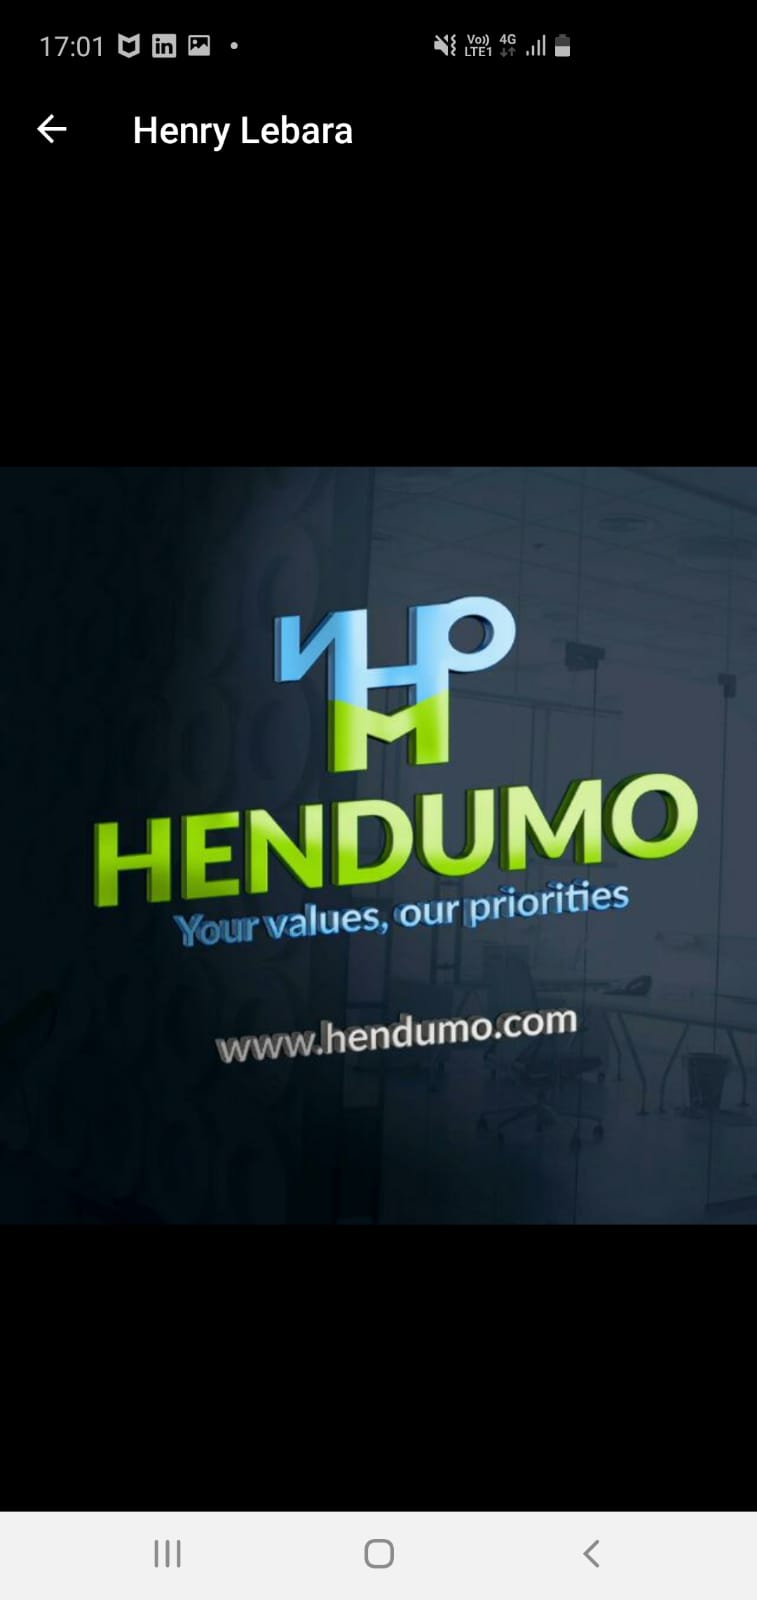 Hendumo Limited